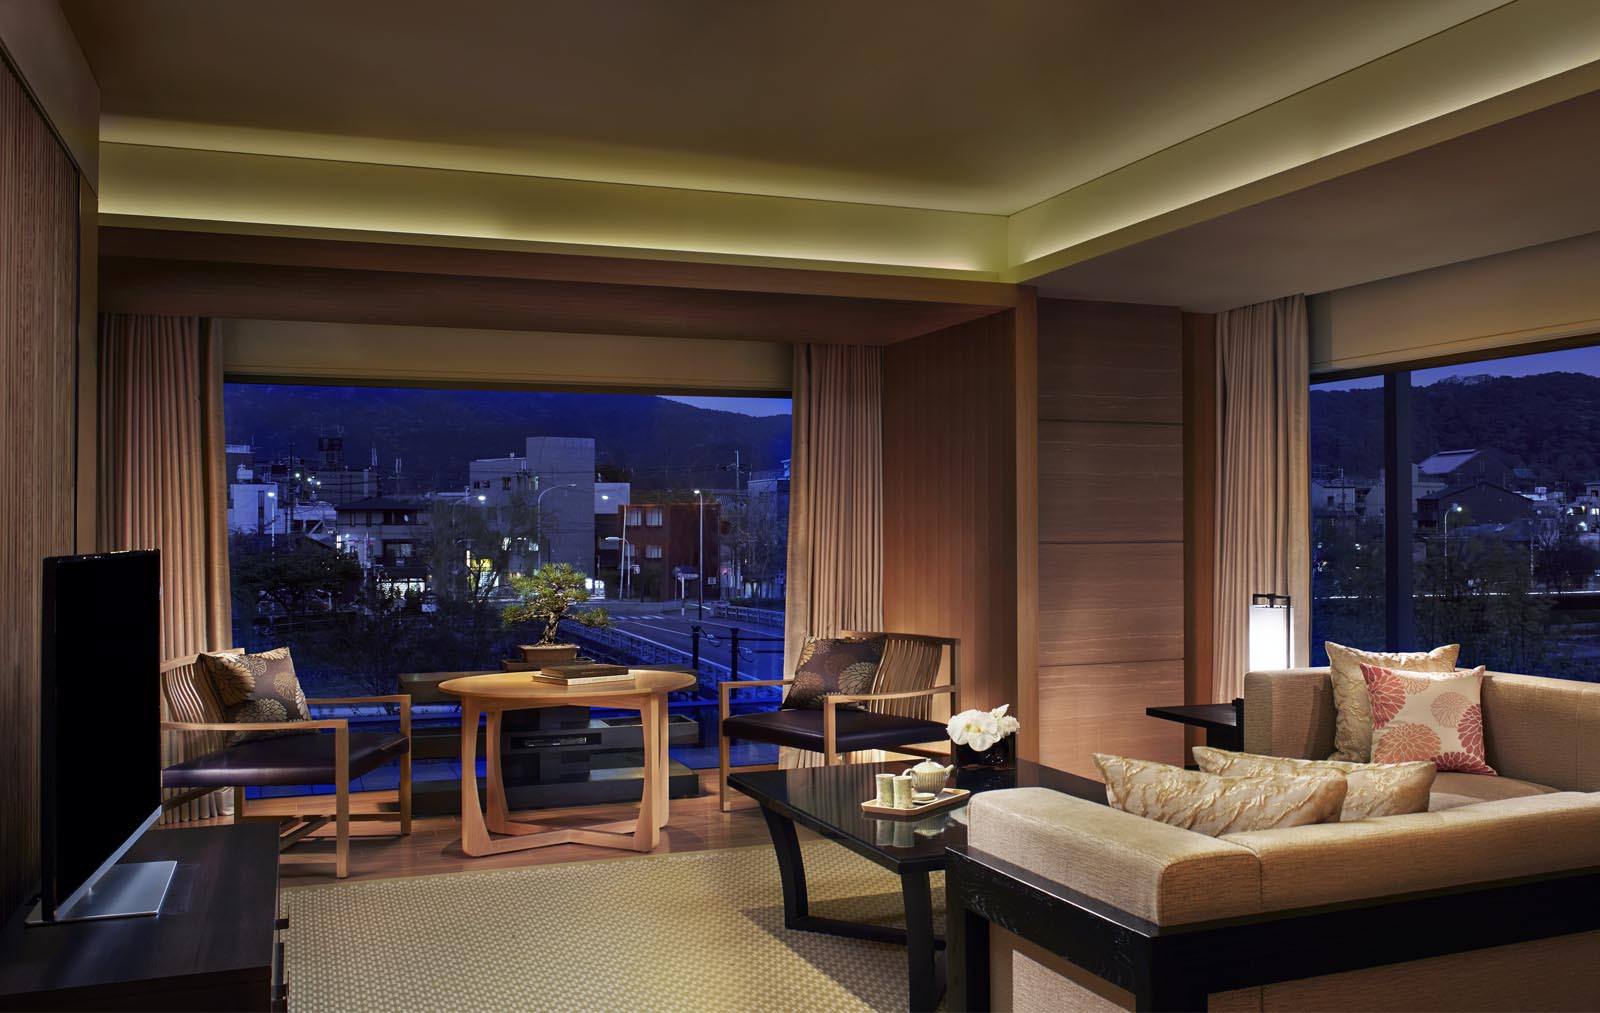 Corner Suite Minami at The Ritz-Carlton, Kyoto offers splendid views of the Kamogawa River and historic Kyoto